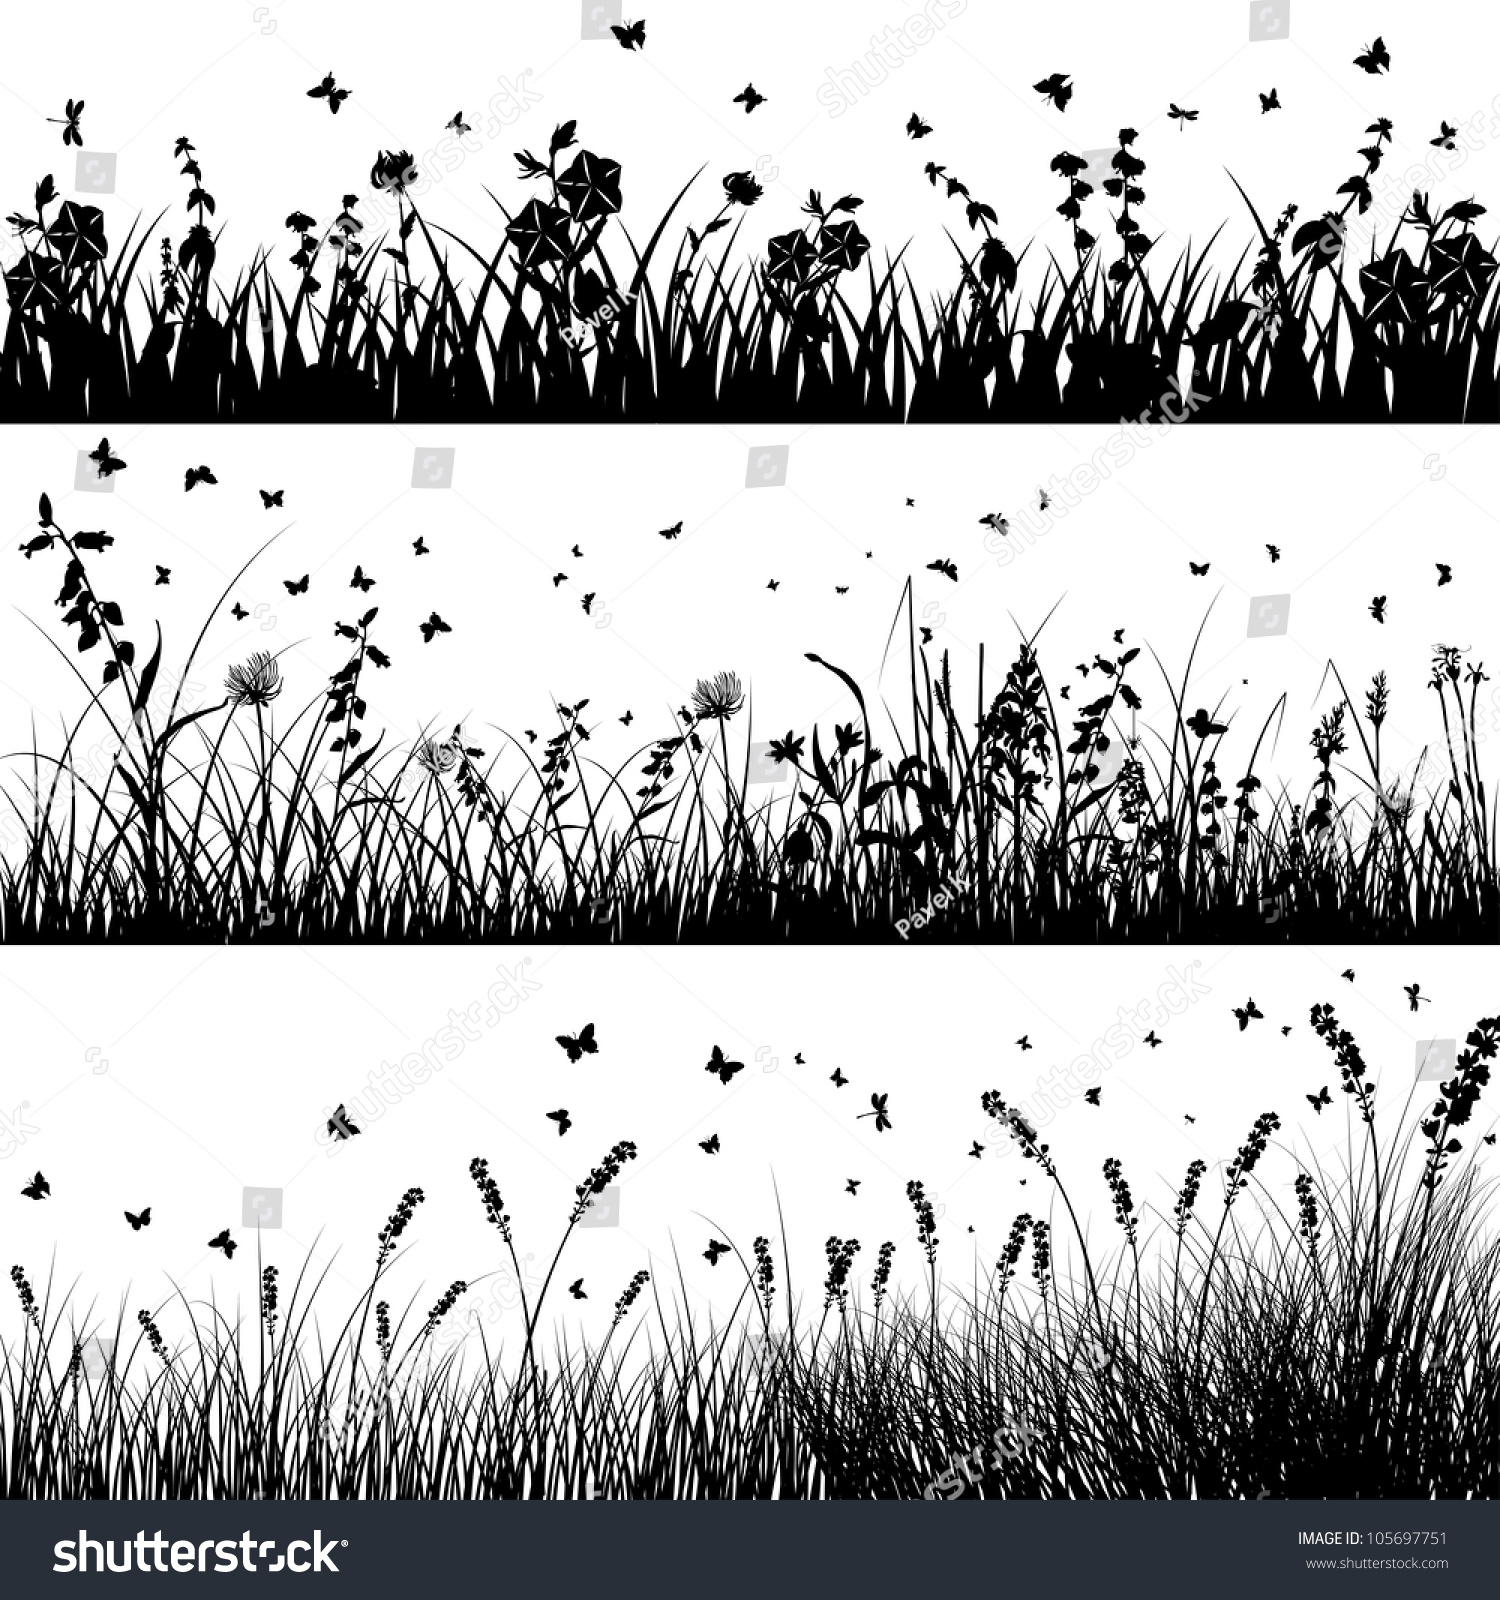 Download Vector Grass Silhouette Background Set All Stock Vector 105697751 - Shutterstock